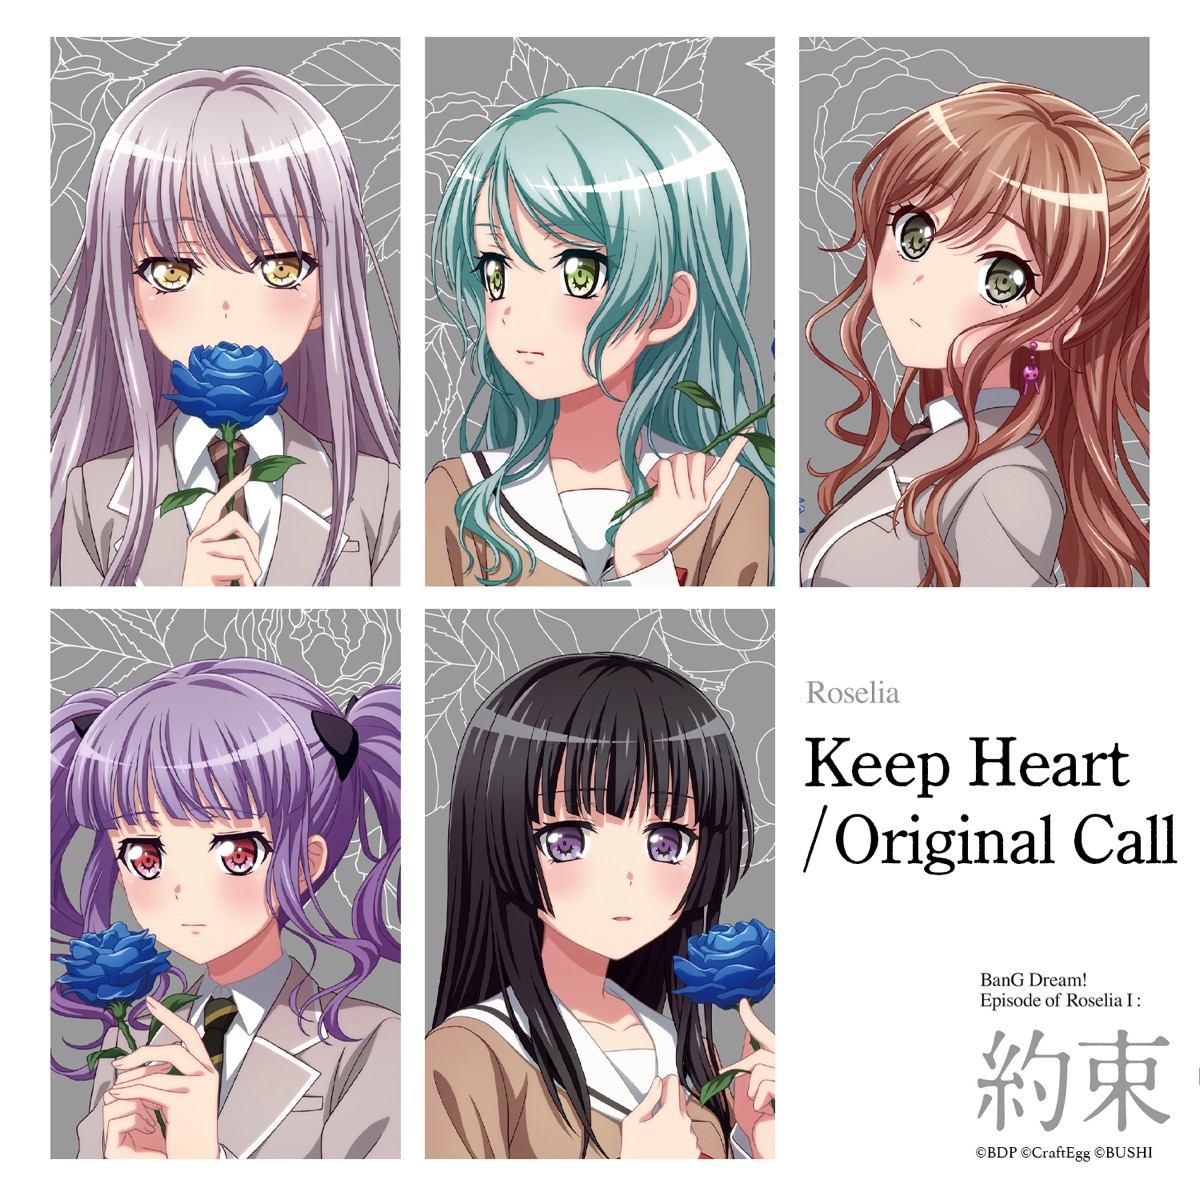 『Roselia - Original Call』収録の『Keep Heart / Original Call』ジャケット